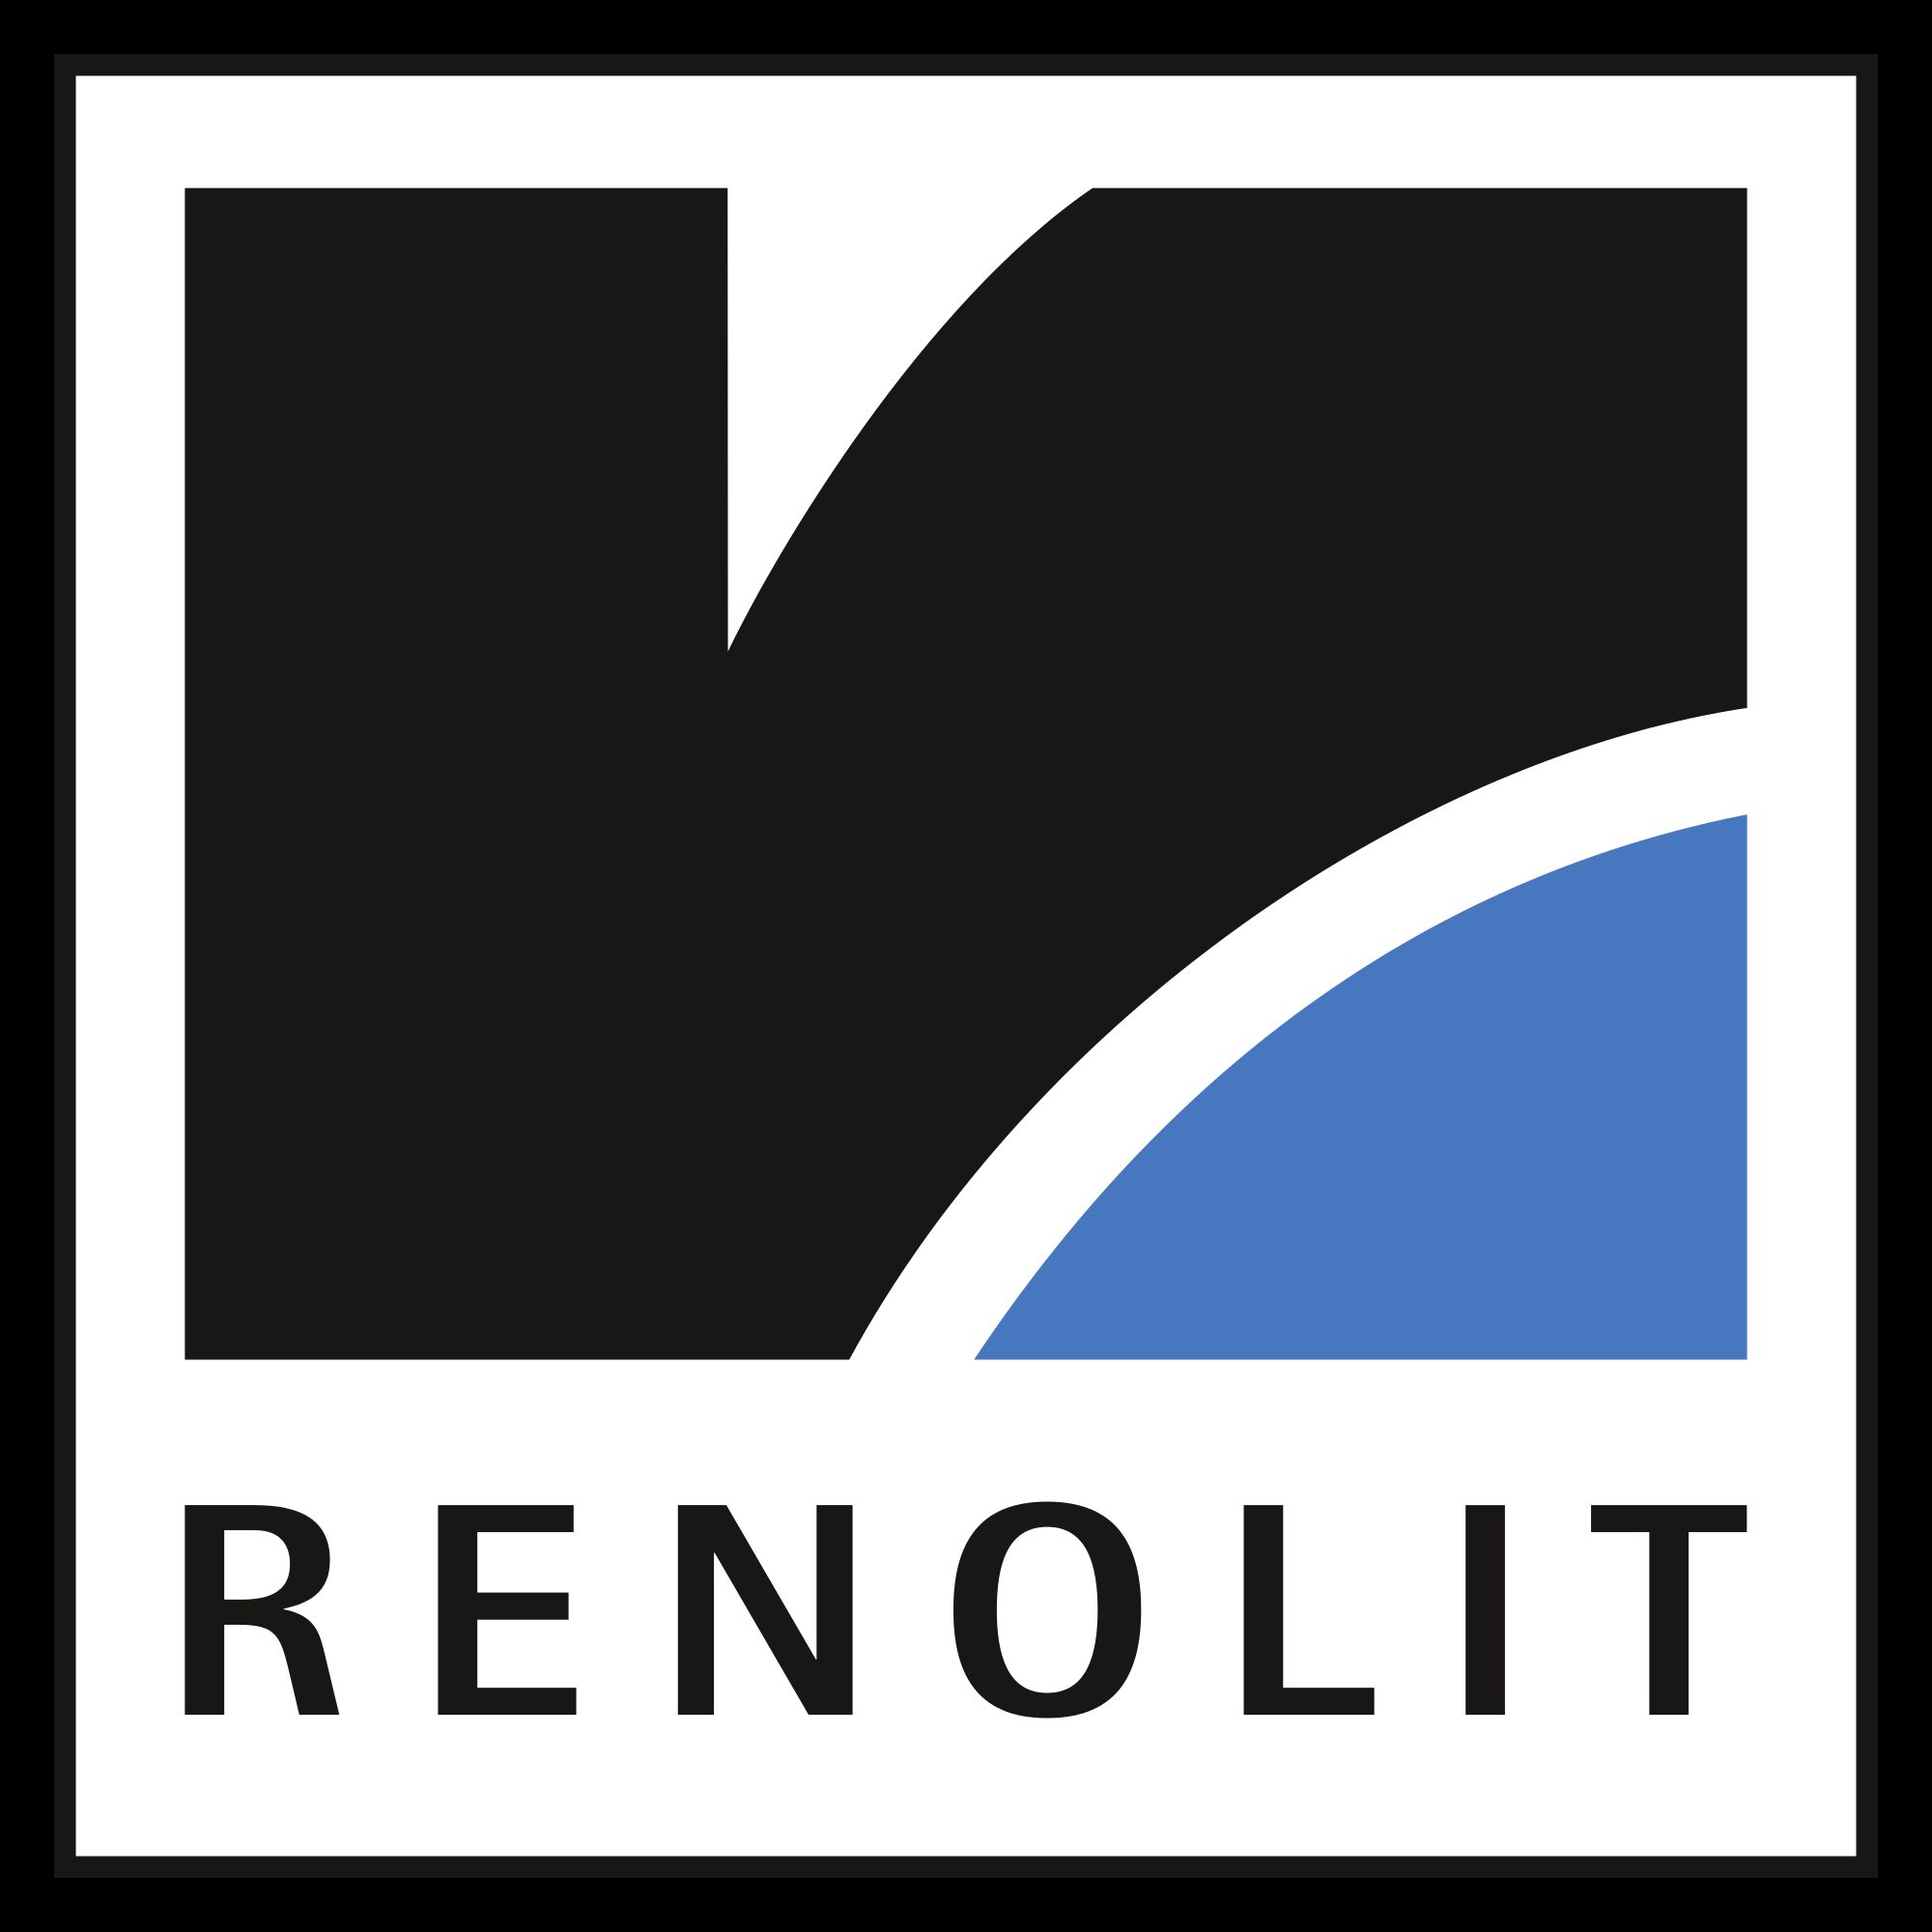 Renolit_logo.svg - Wildschut dakbedekkingen